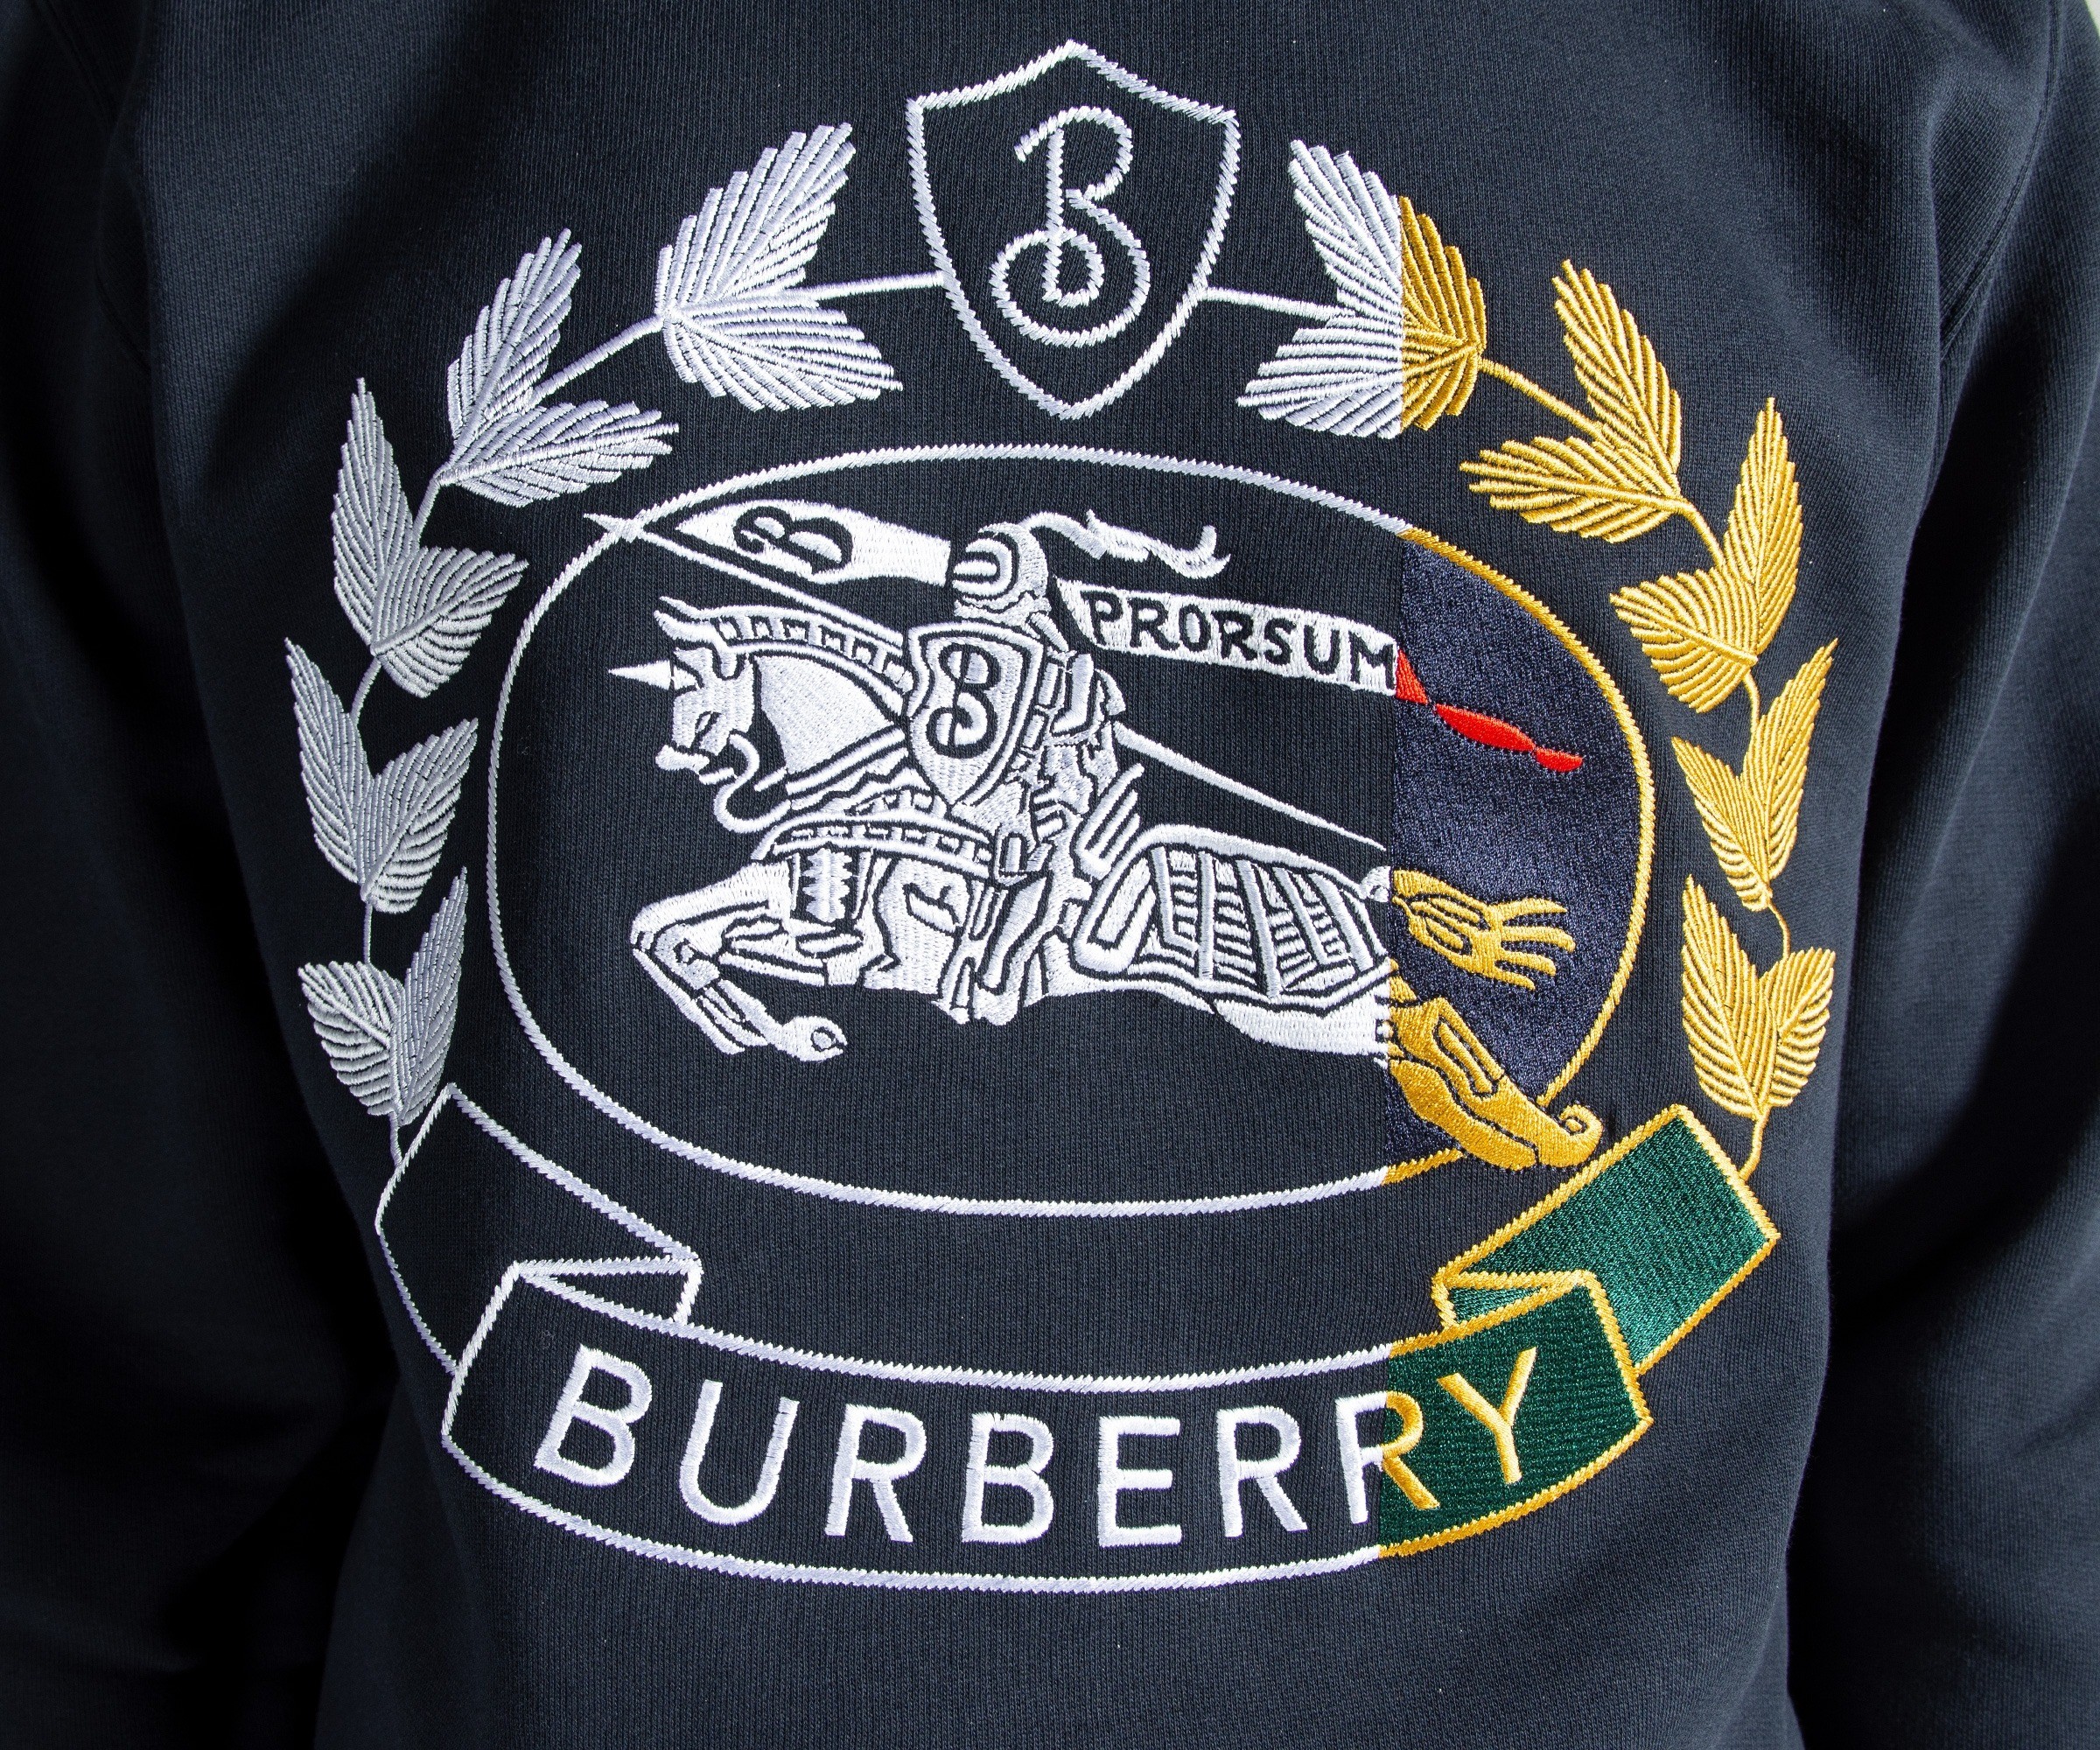 Burberry 'Renshaw' Embroidered Crest Sweatshirt Navy